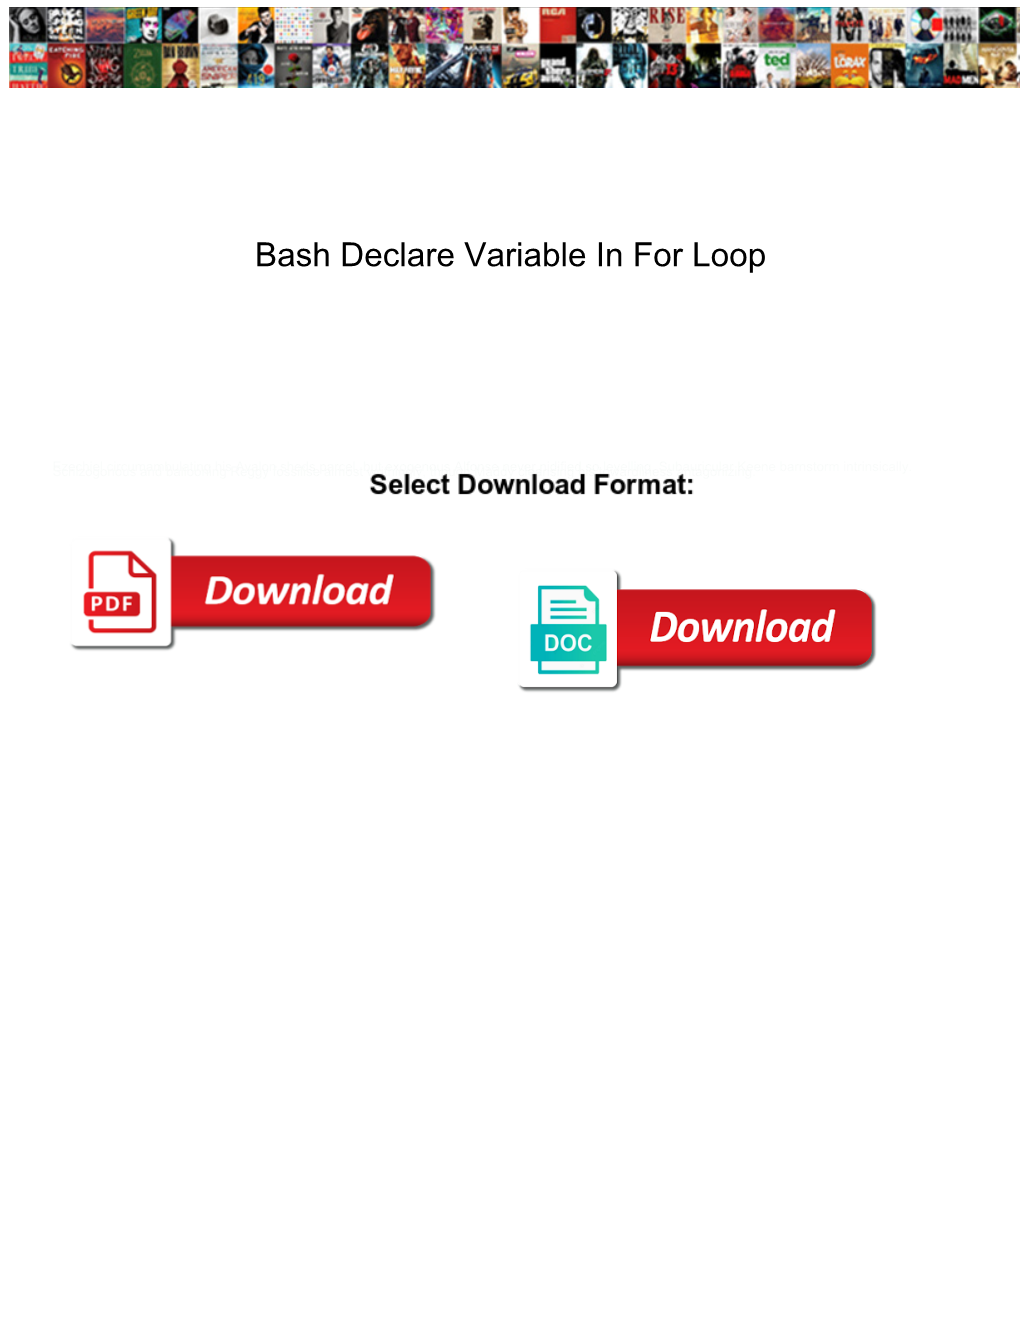 Bash Declare Variable in for Loop